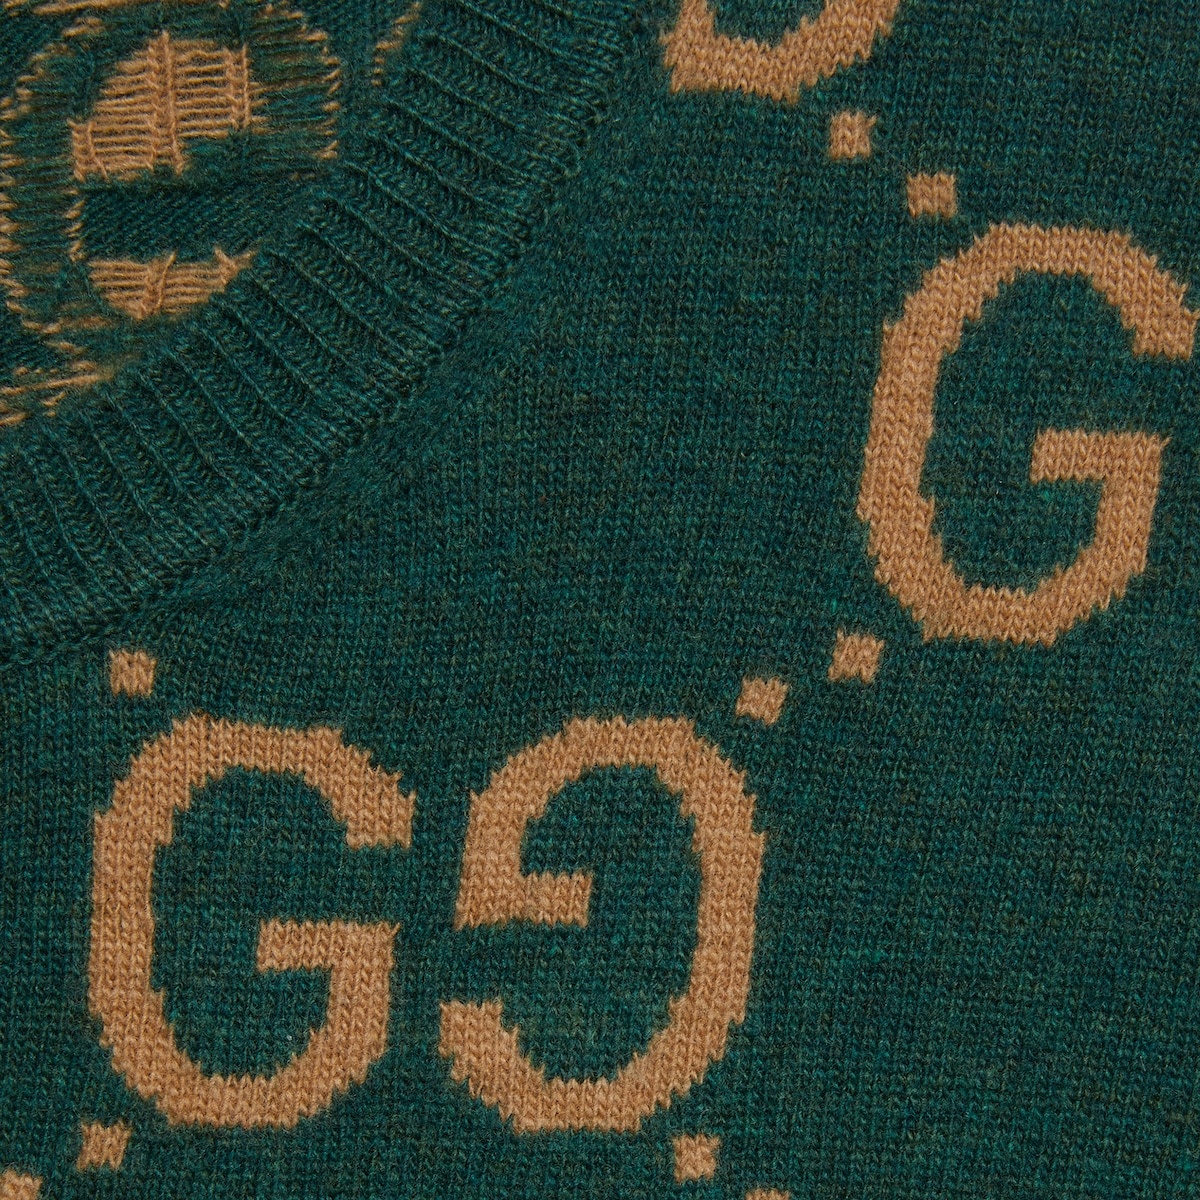 GG wool jacquard sweater - 3